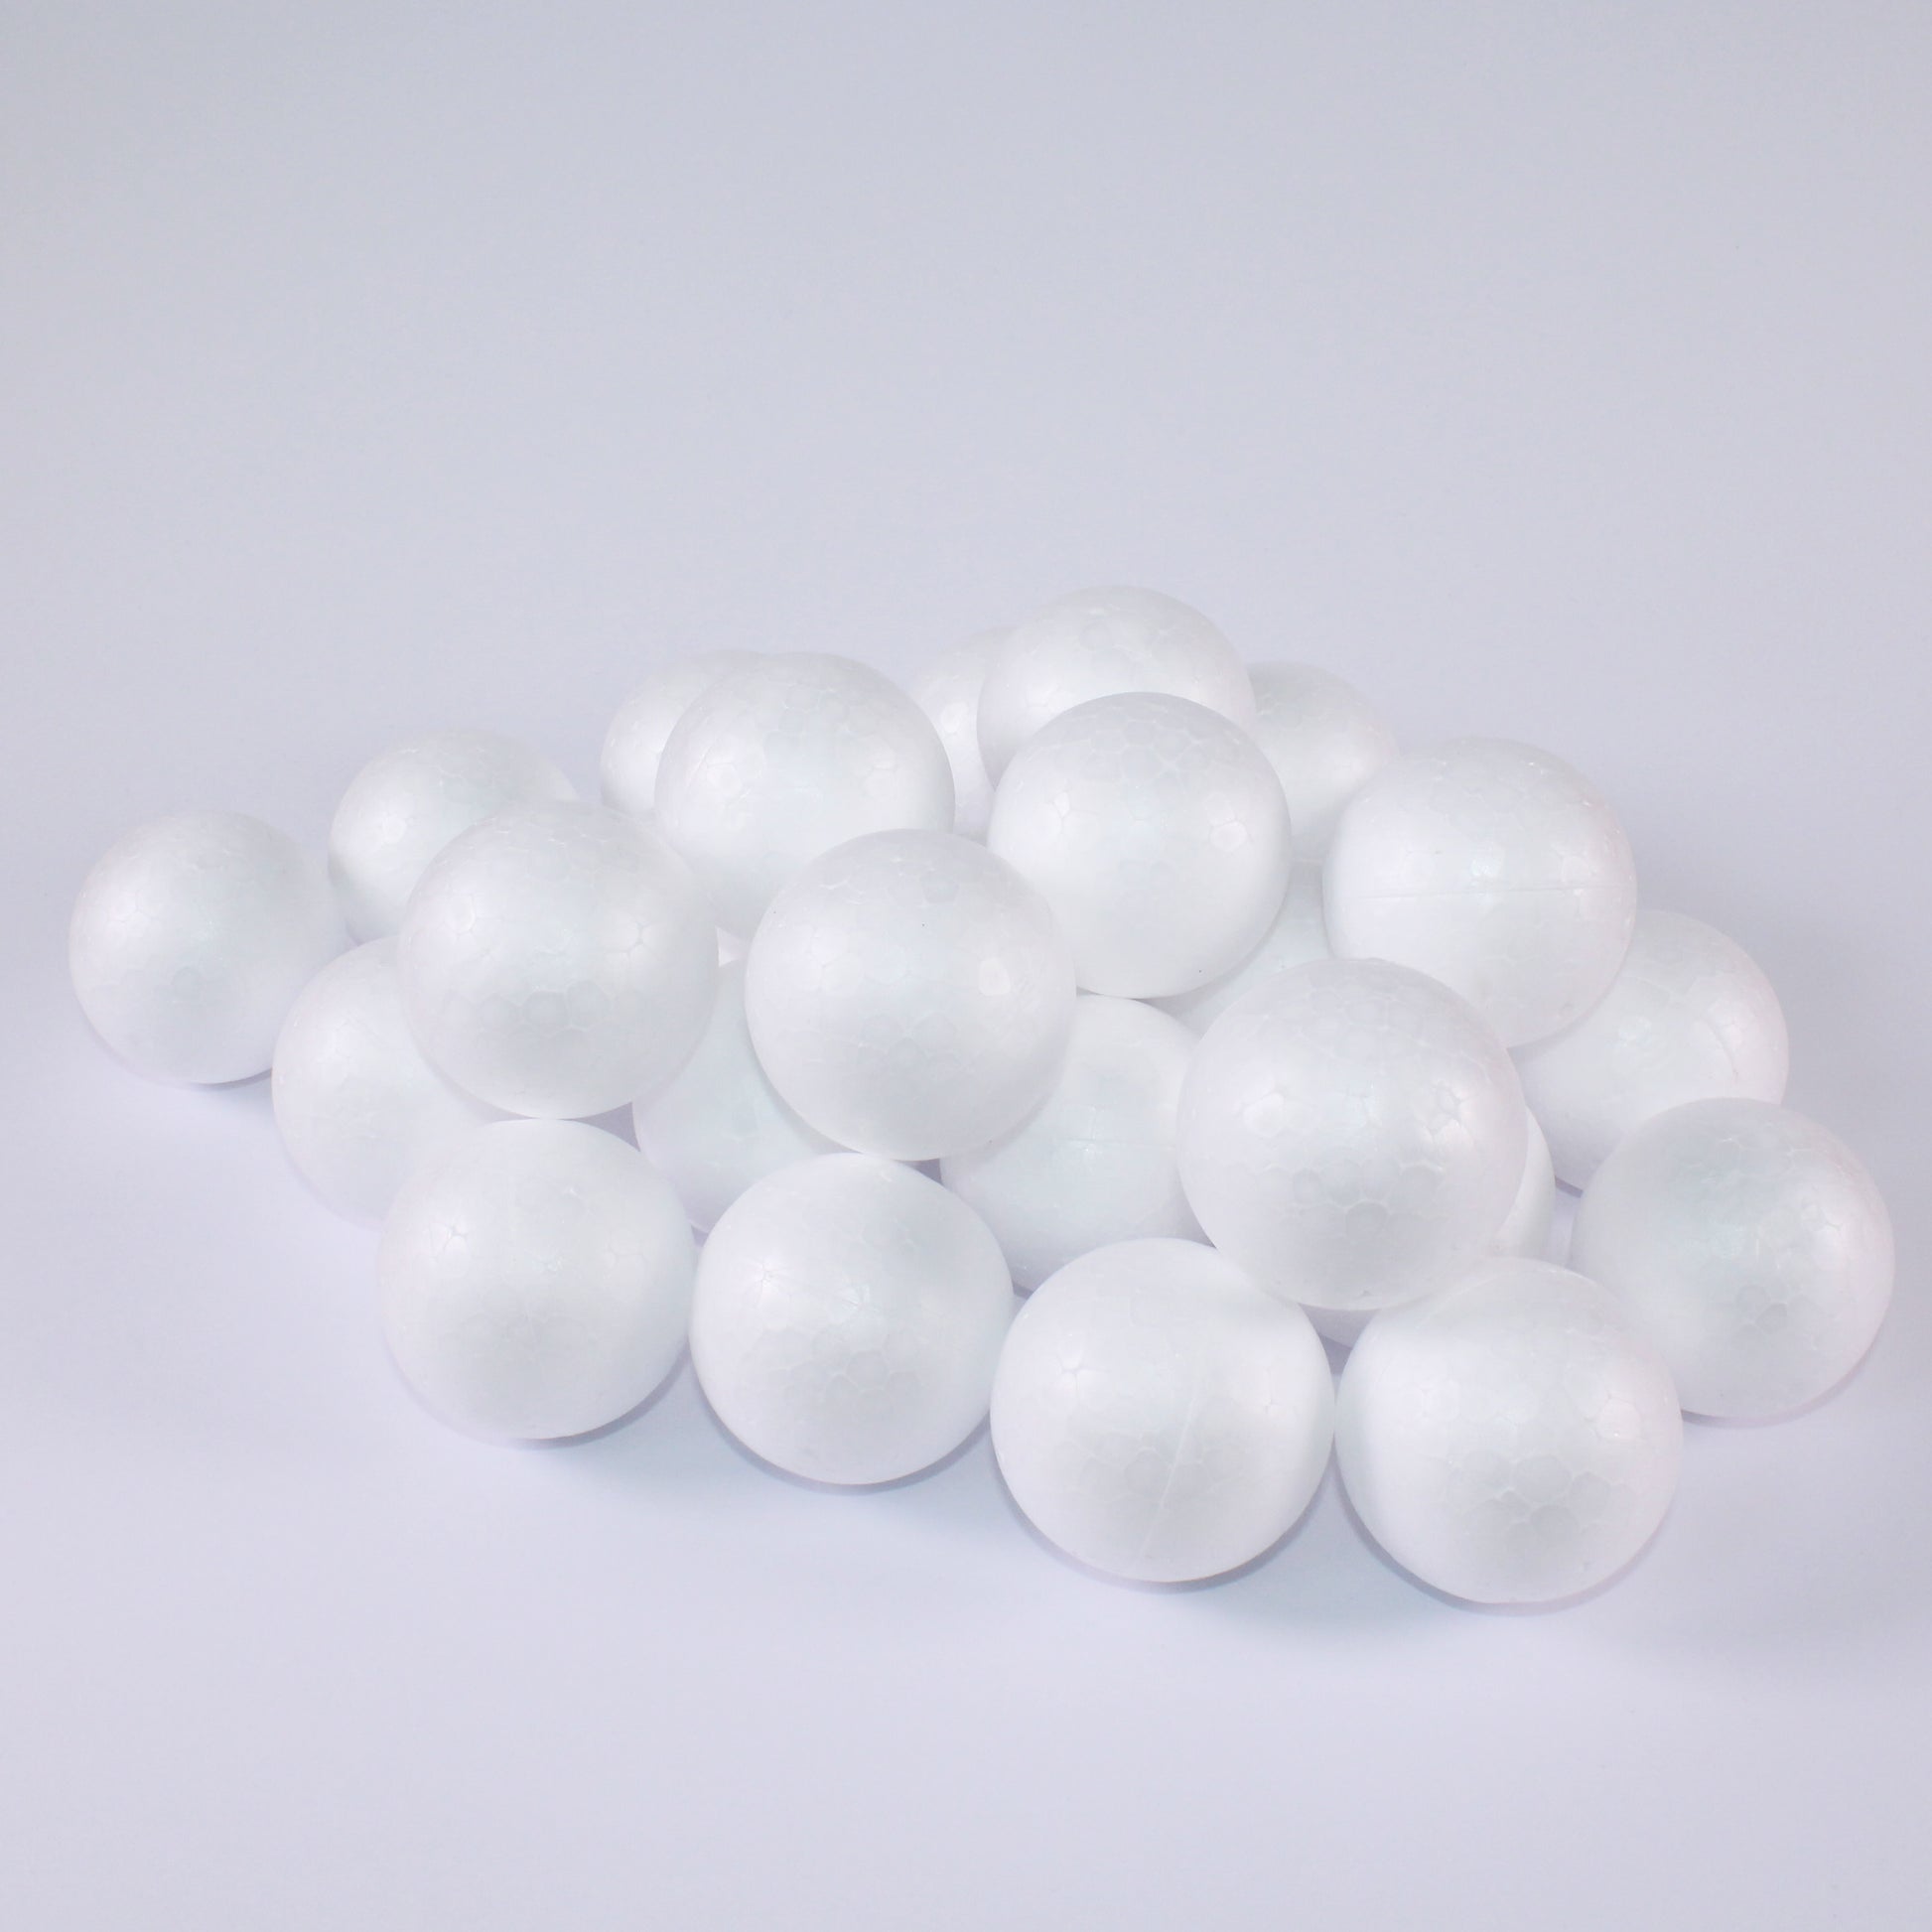 70mm polystyrene balls